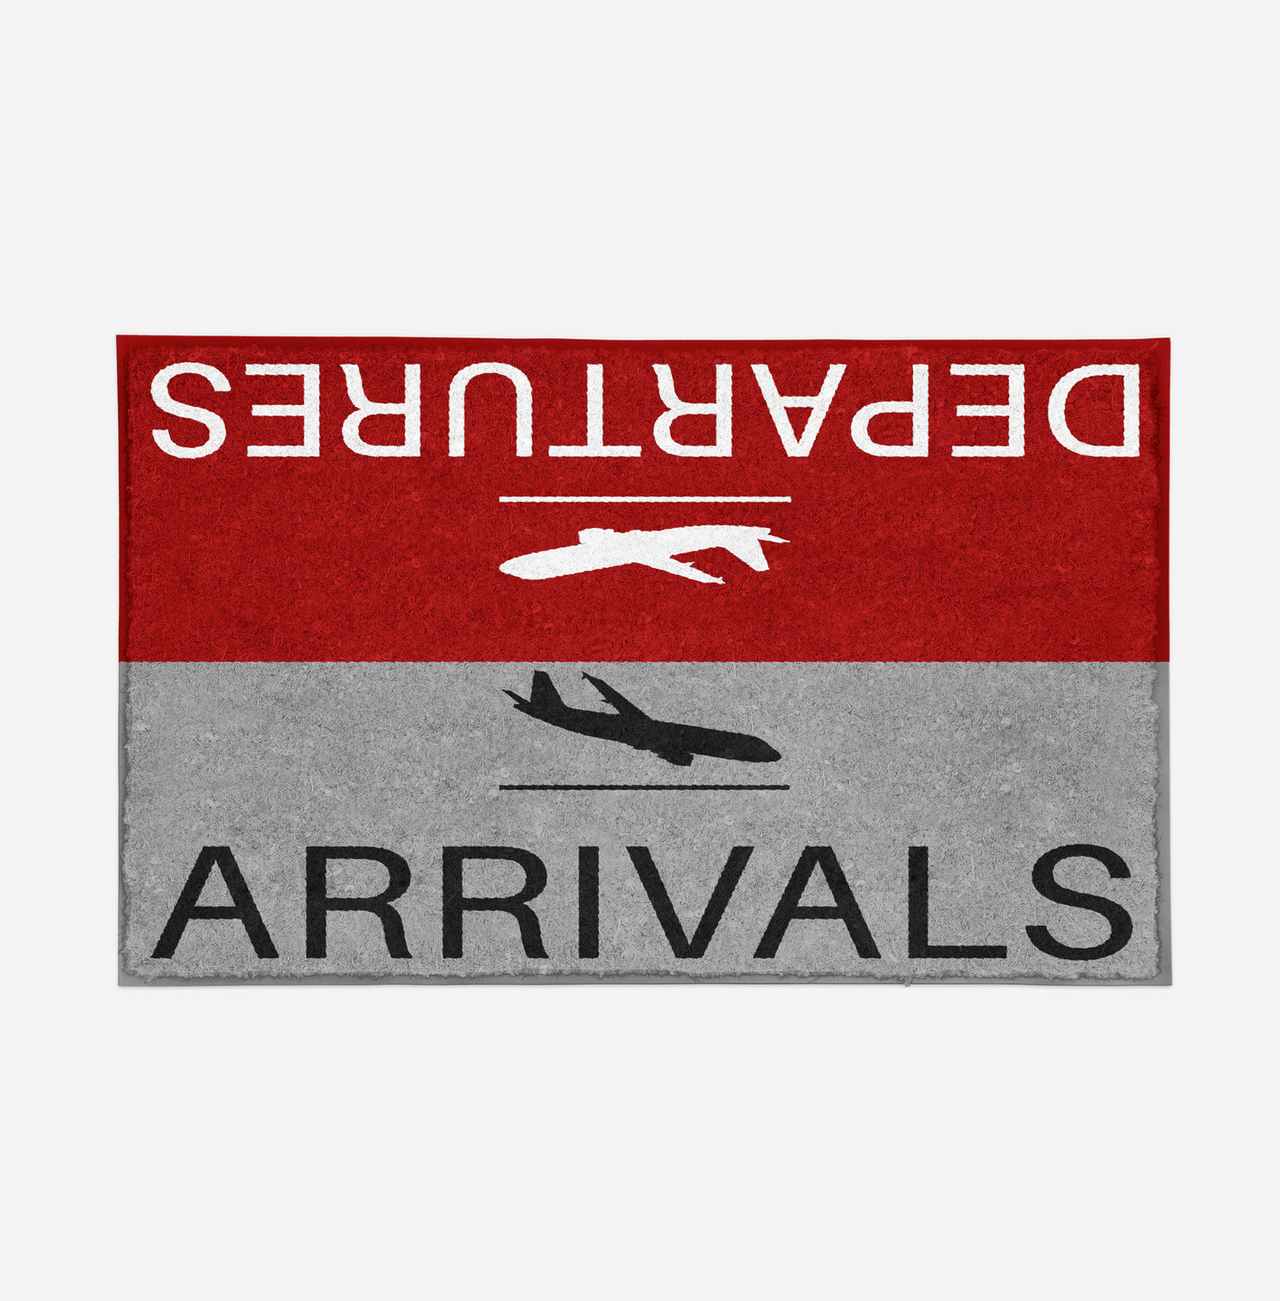 Departure and Arrivals (Red) Designed Door Mats Aviation Shop 